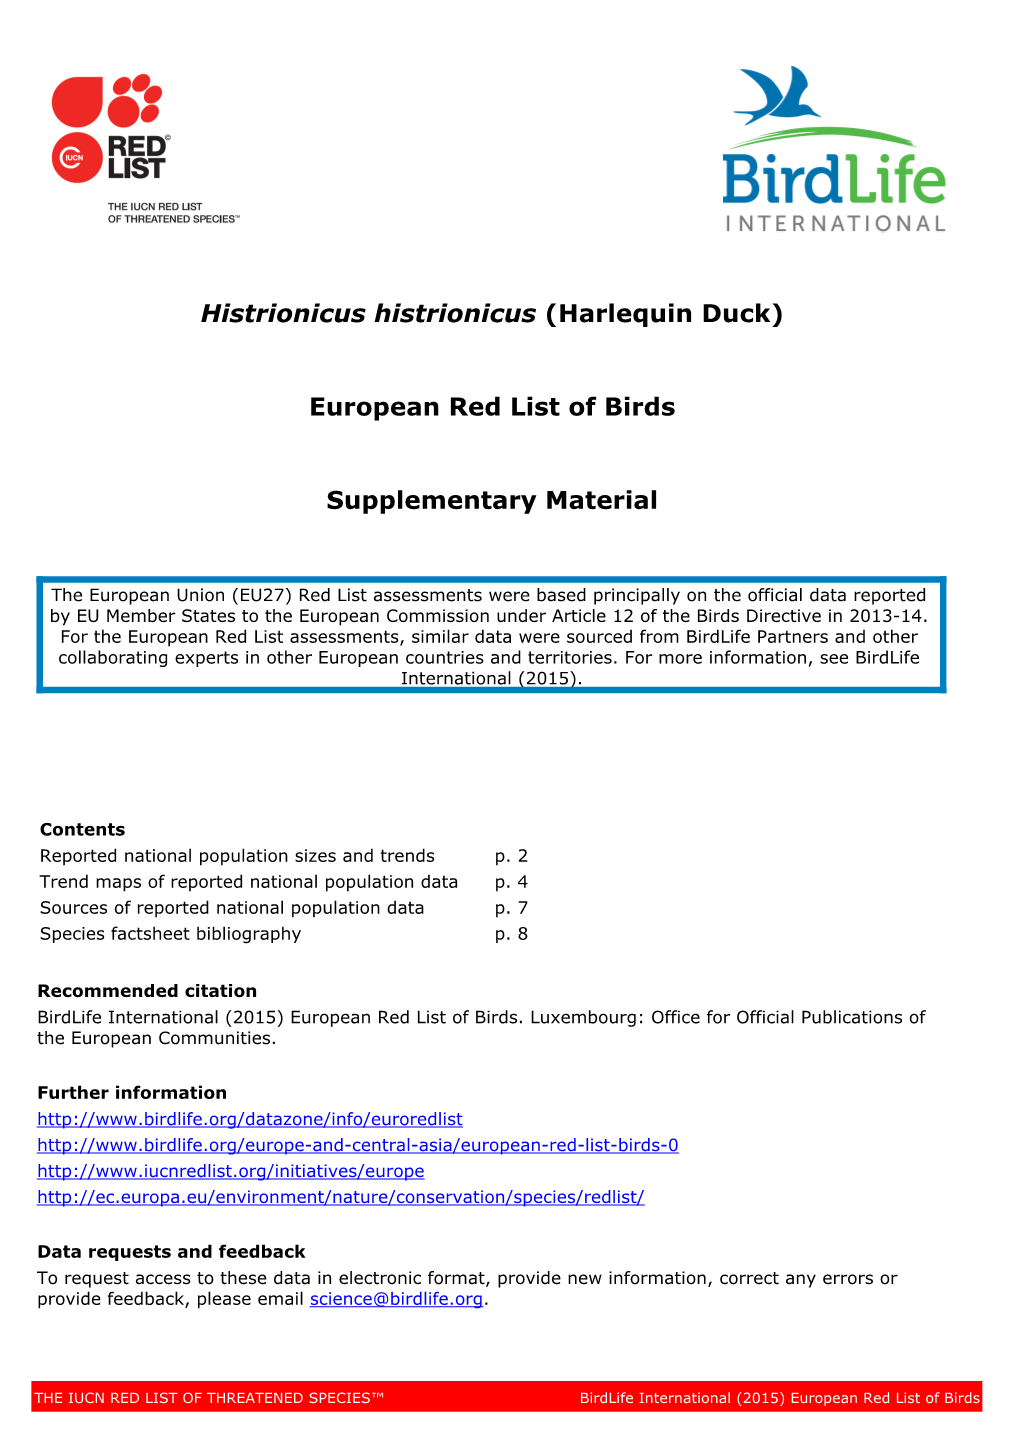 (Harlequin Duck) European Red List of Birds Supplementary Material